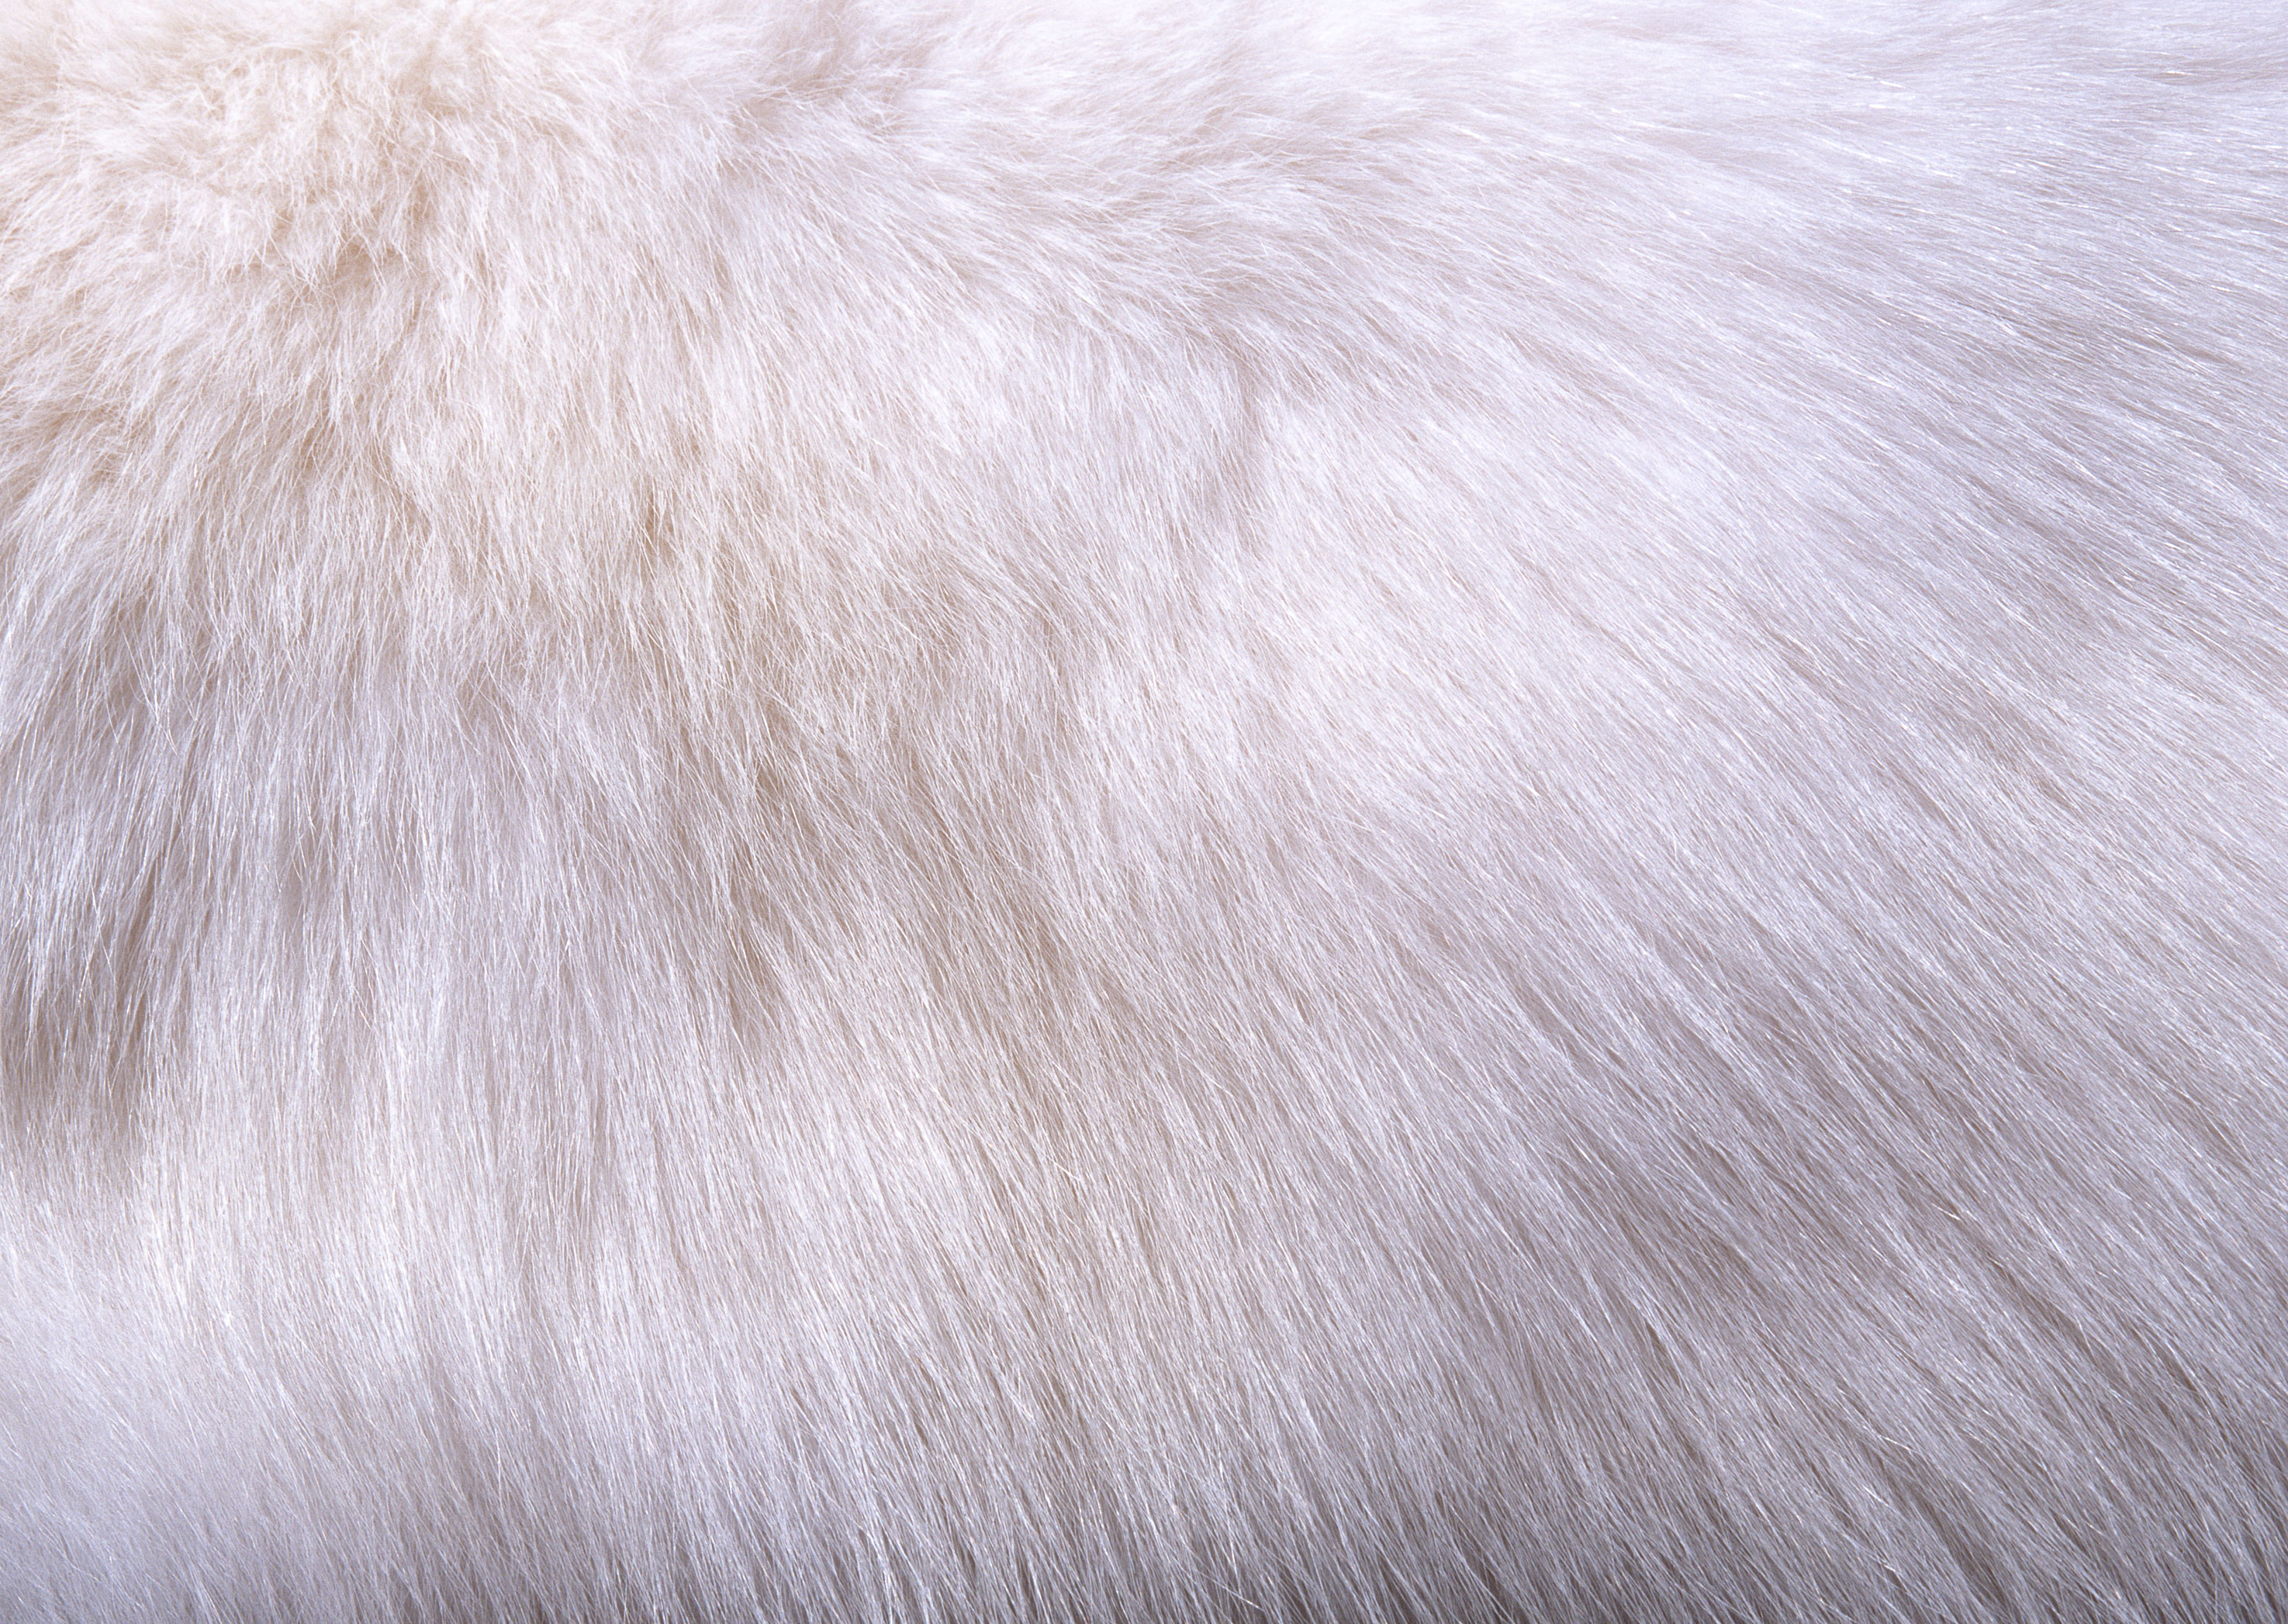 White fur texture background image